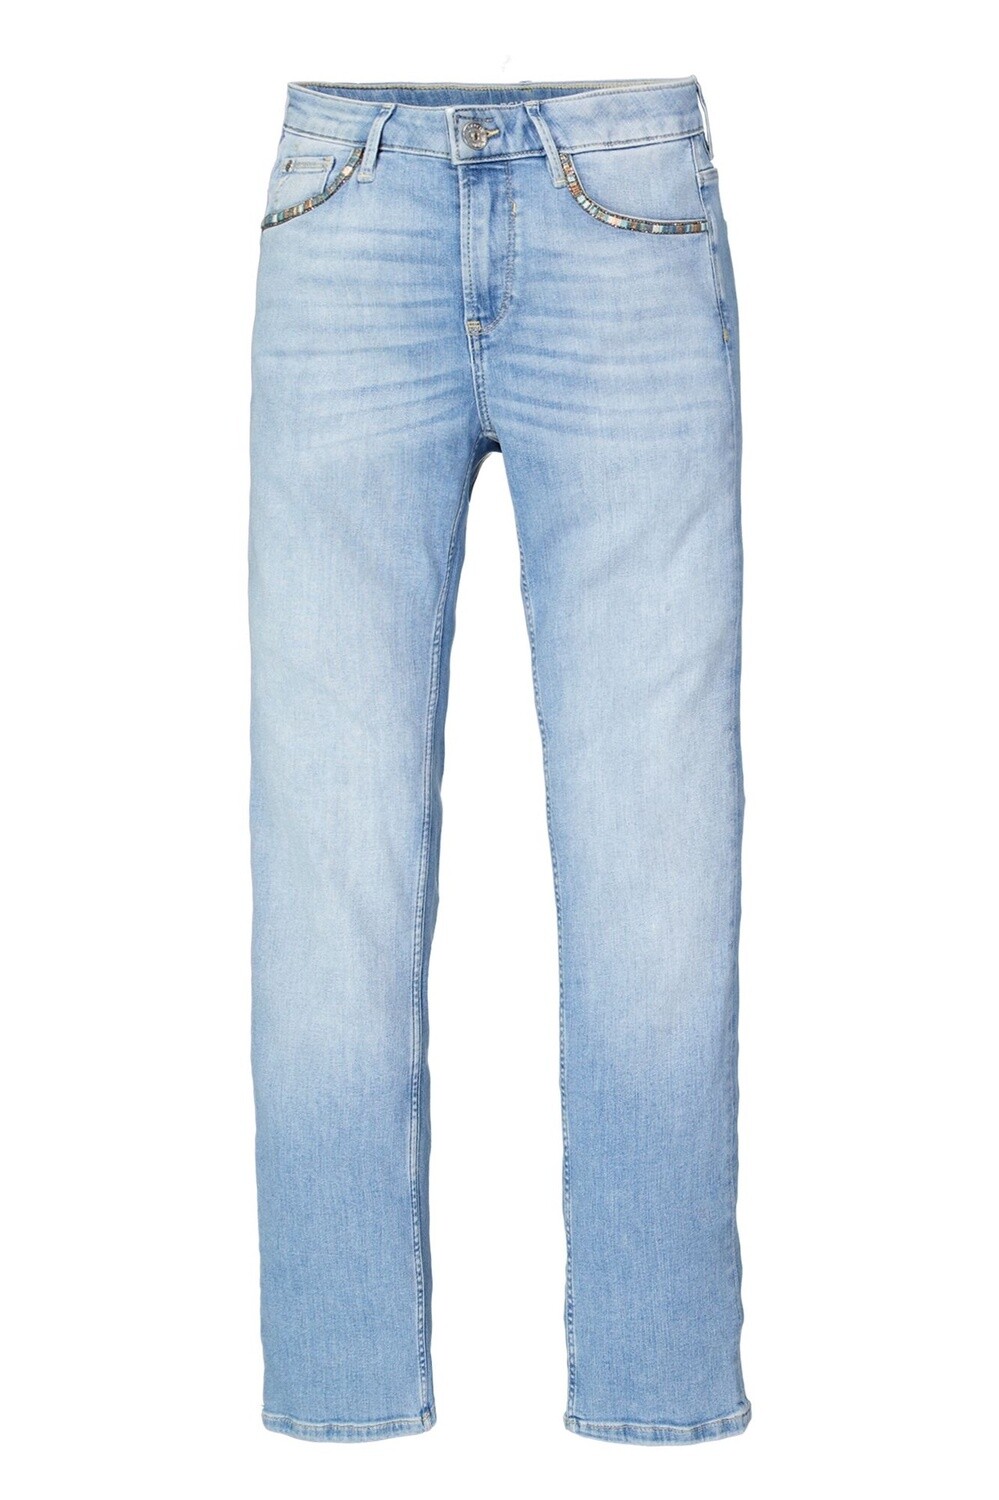 Garcia Jeans Celia Straight bleu pâle N40313, Size: 25